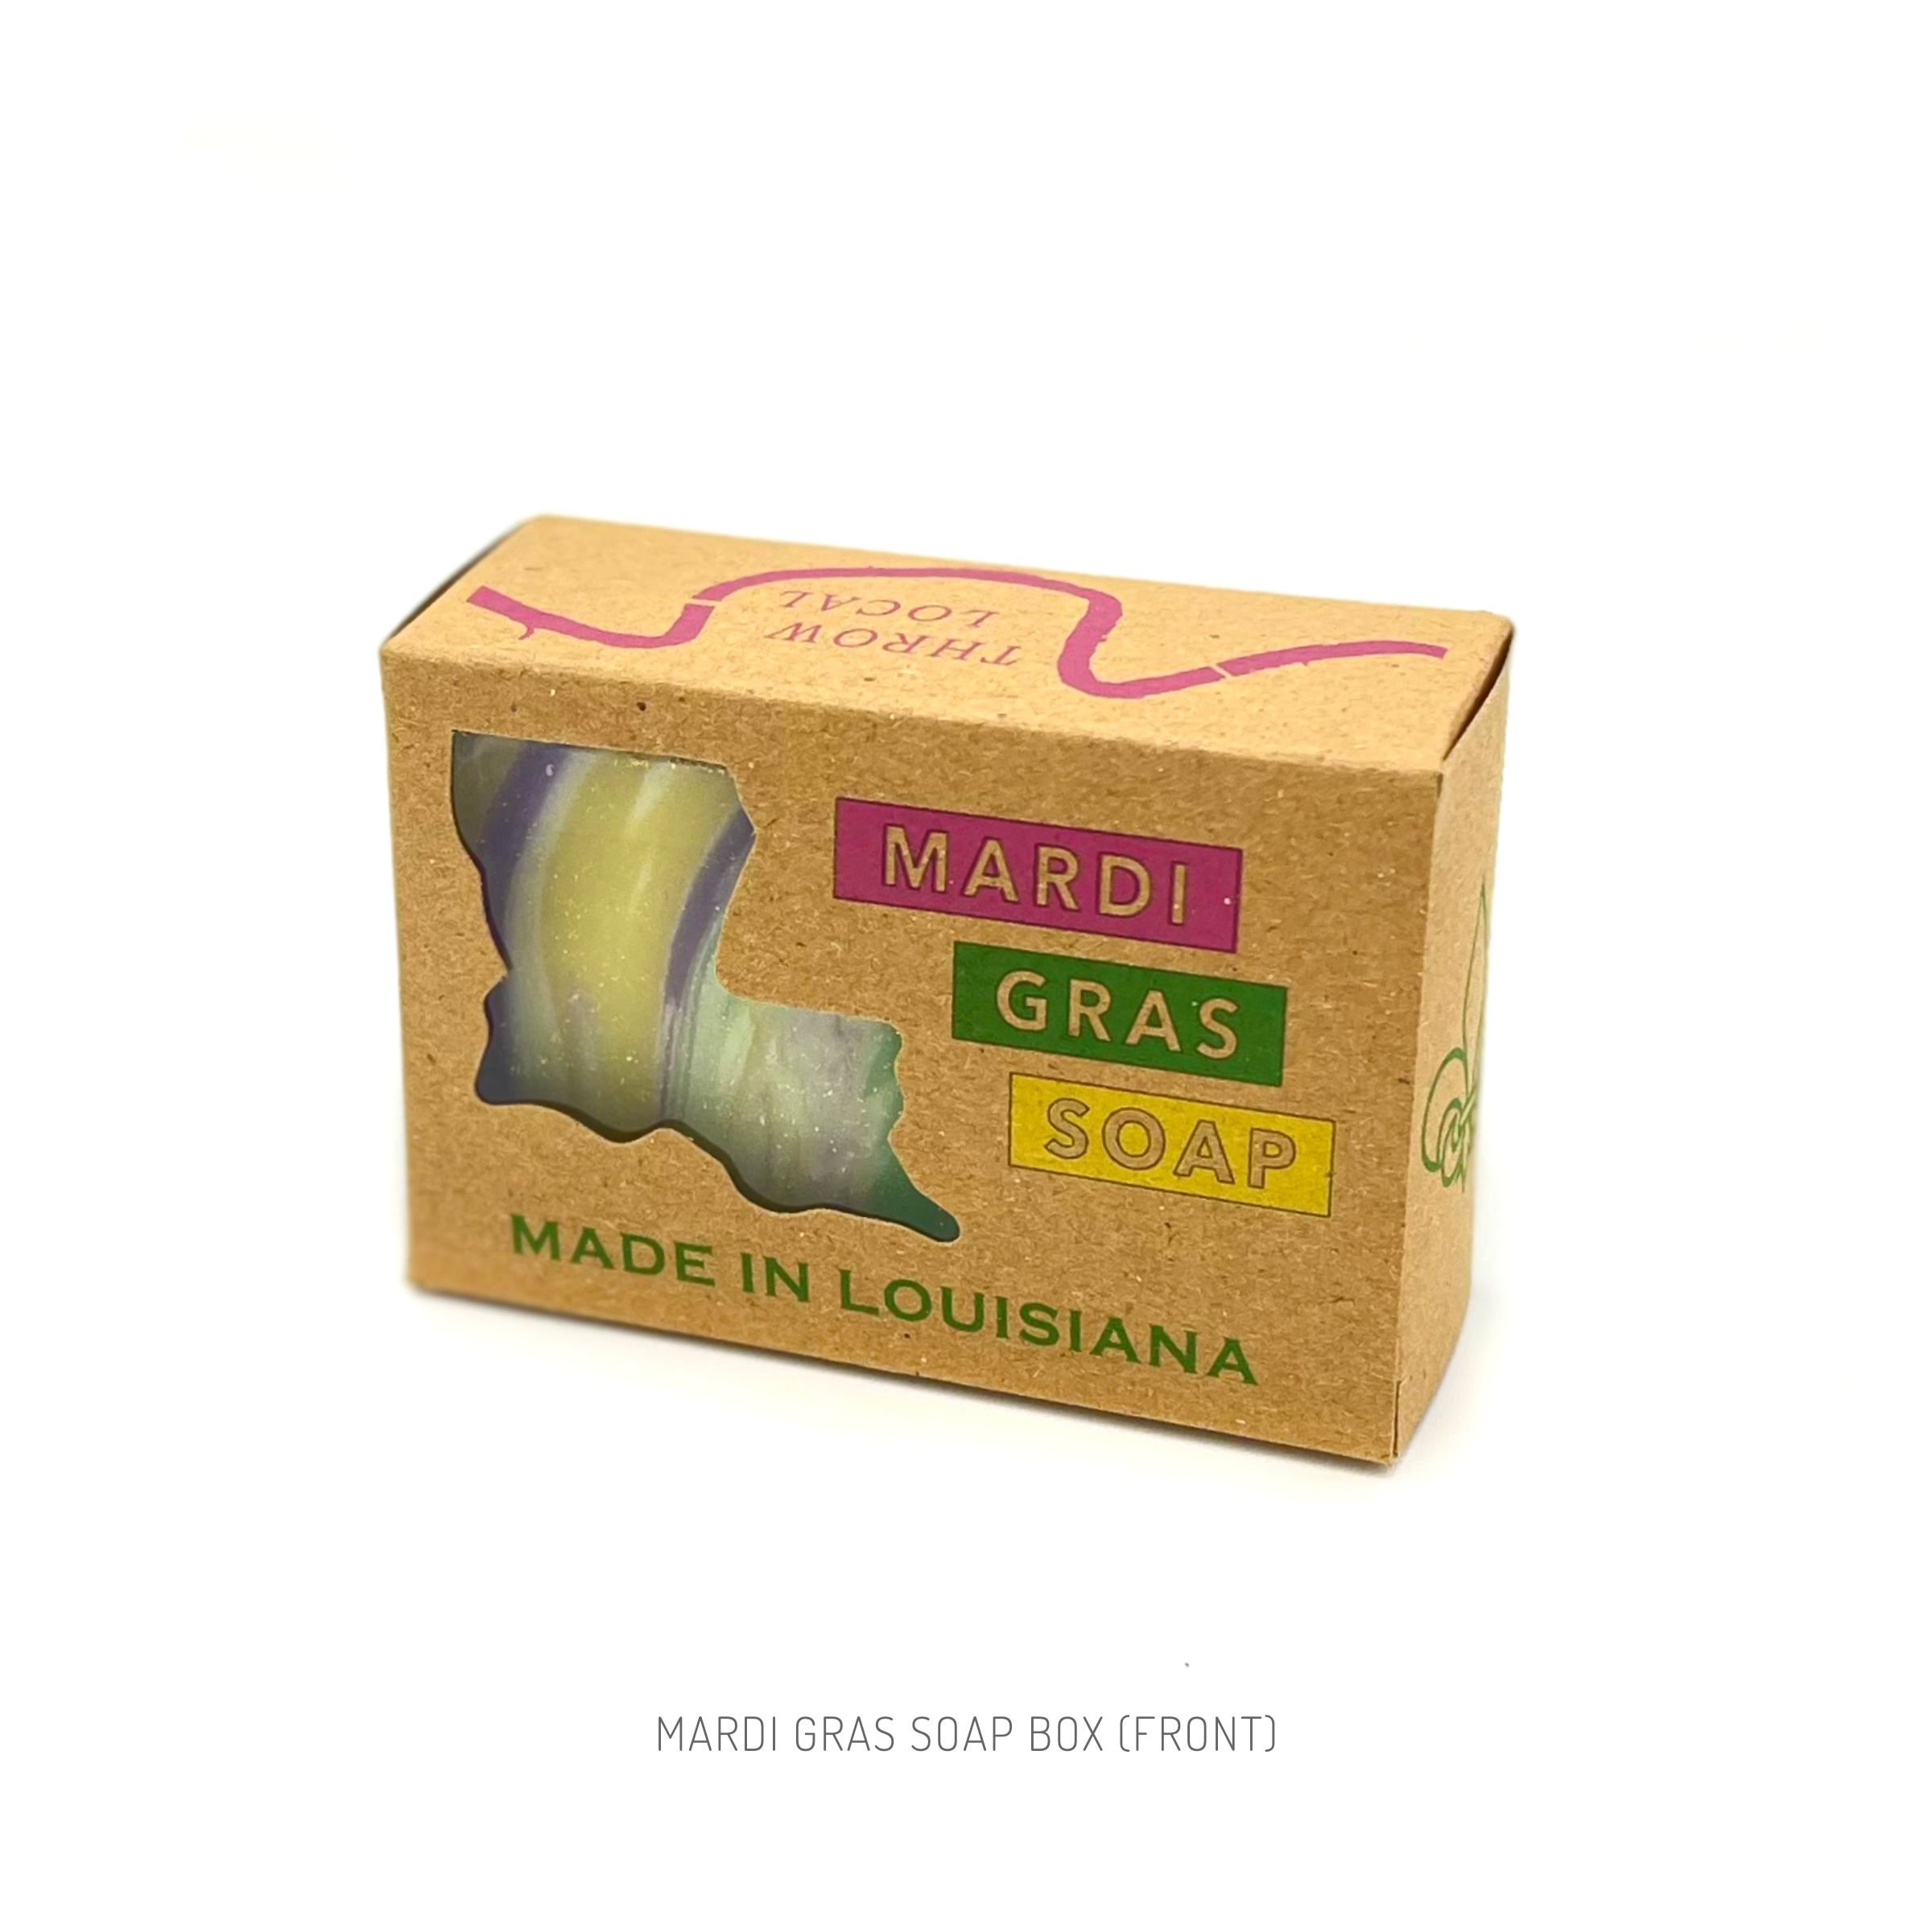 Mardi Gras Soap Box Front.jpg